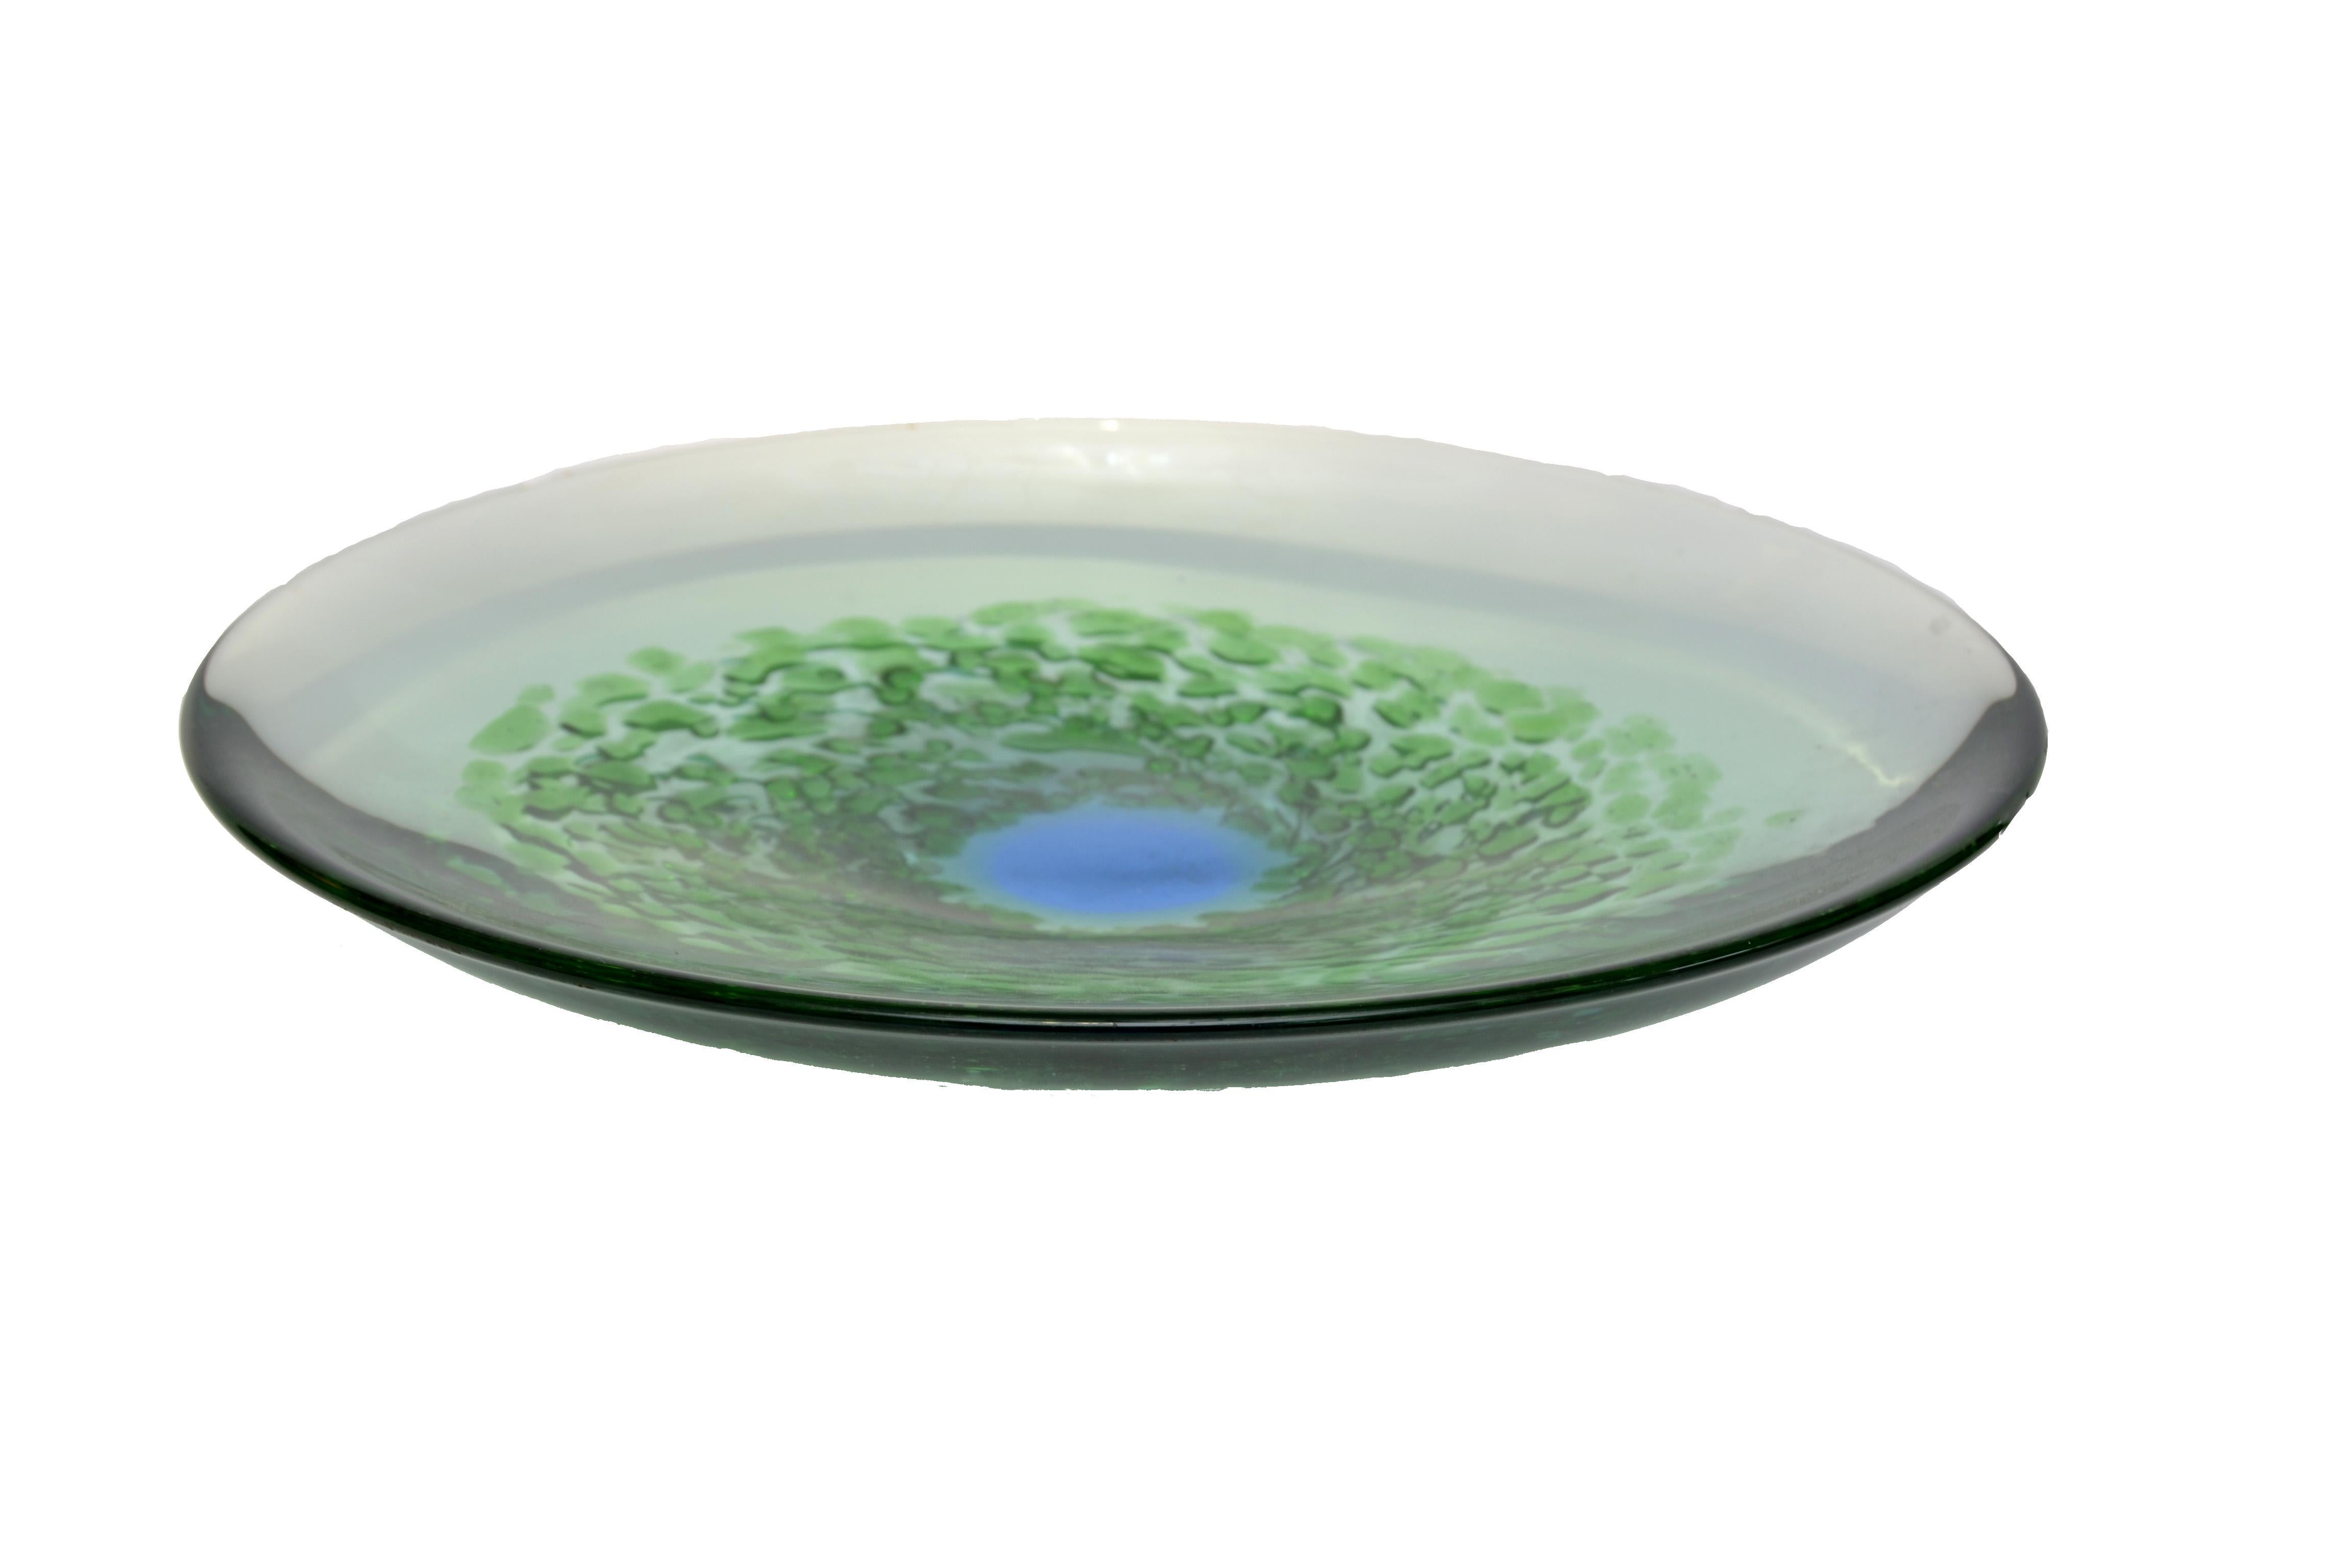 murano glass plates italy